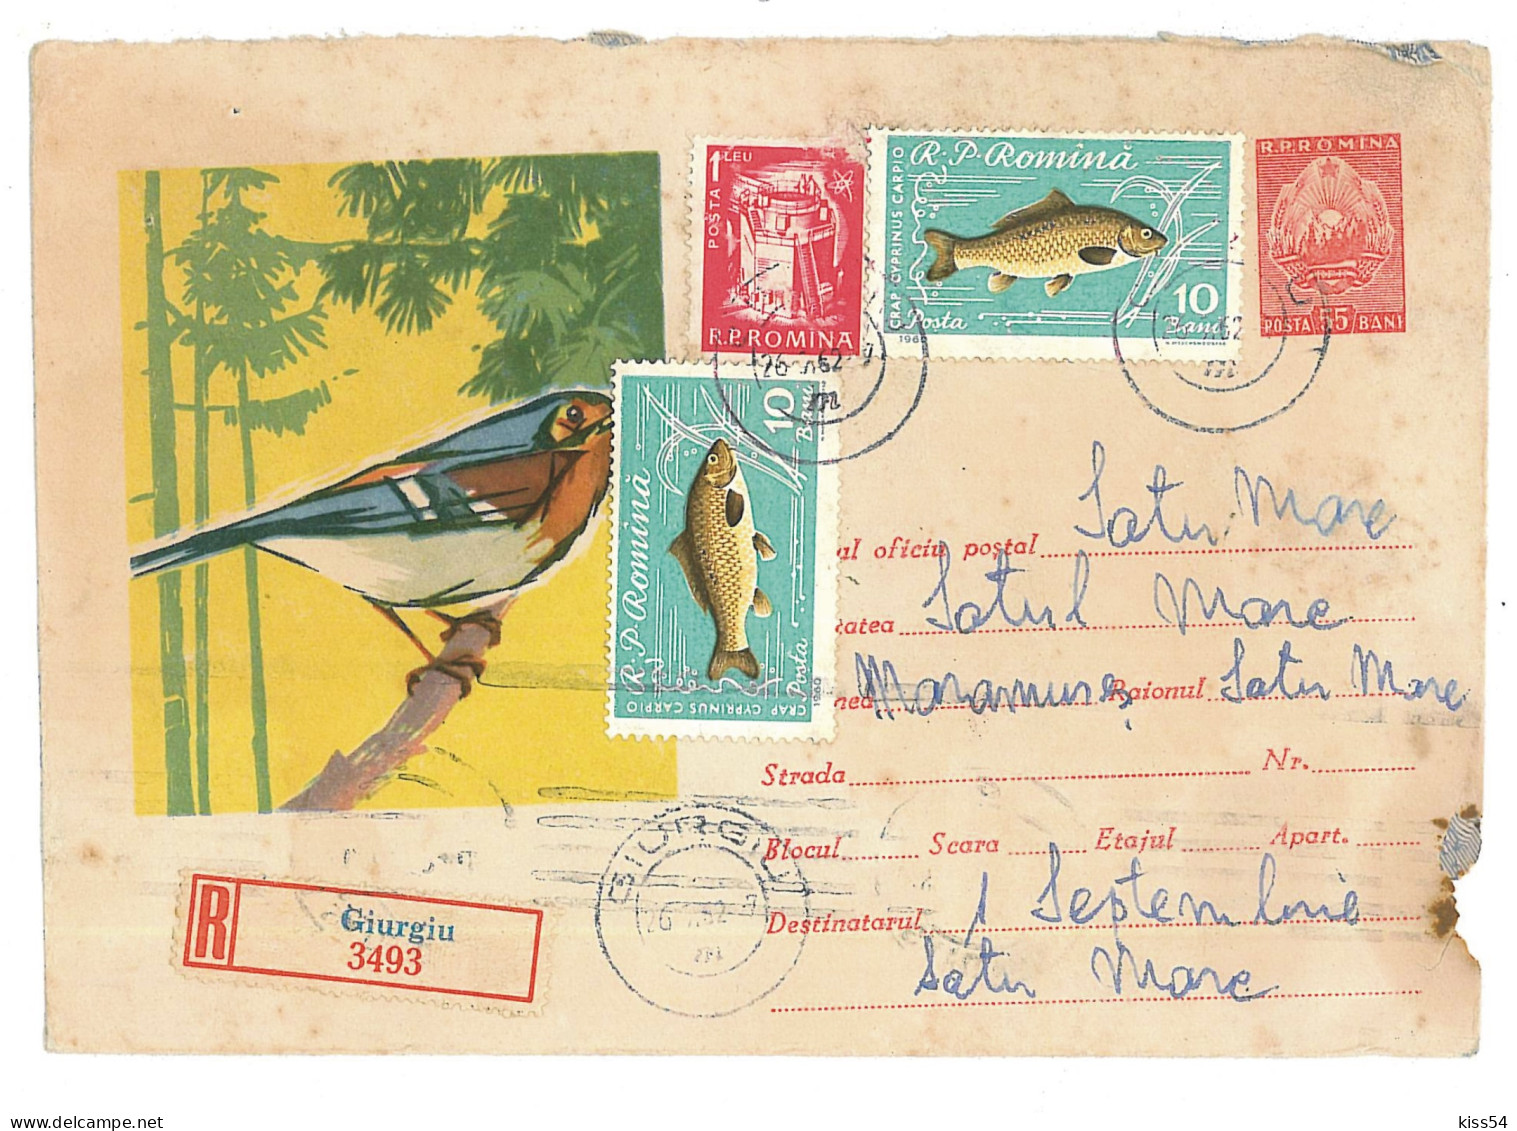 IP 62 - 0155 BIRD, Romania - Registered Stationery - Used - 1962 - Pics & Grimpeurs